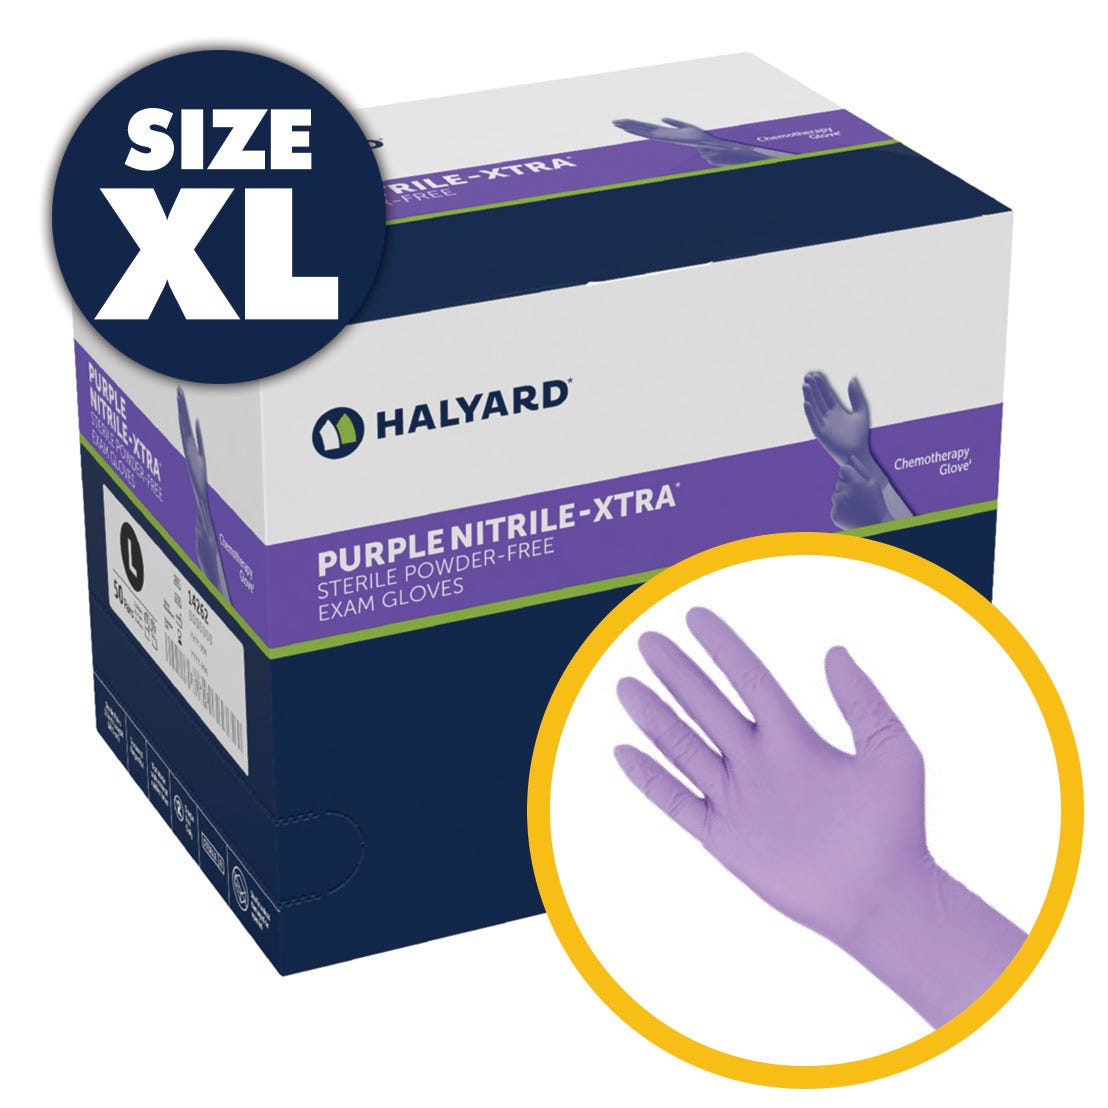 Purple Nitrile-XTRA Sterile Exam Gloves, X-Large, Powder Free, Latex Free, 50prs/Box